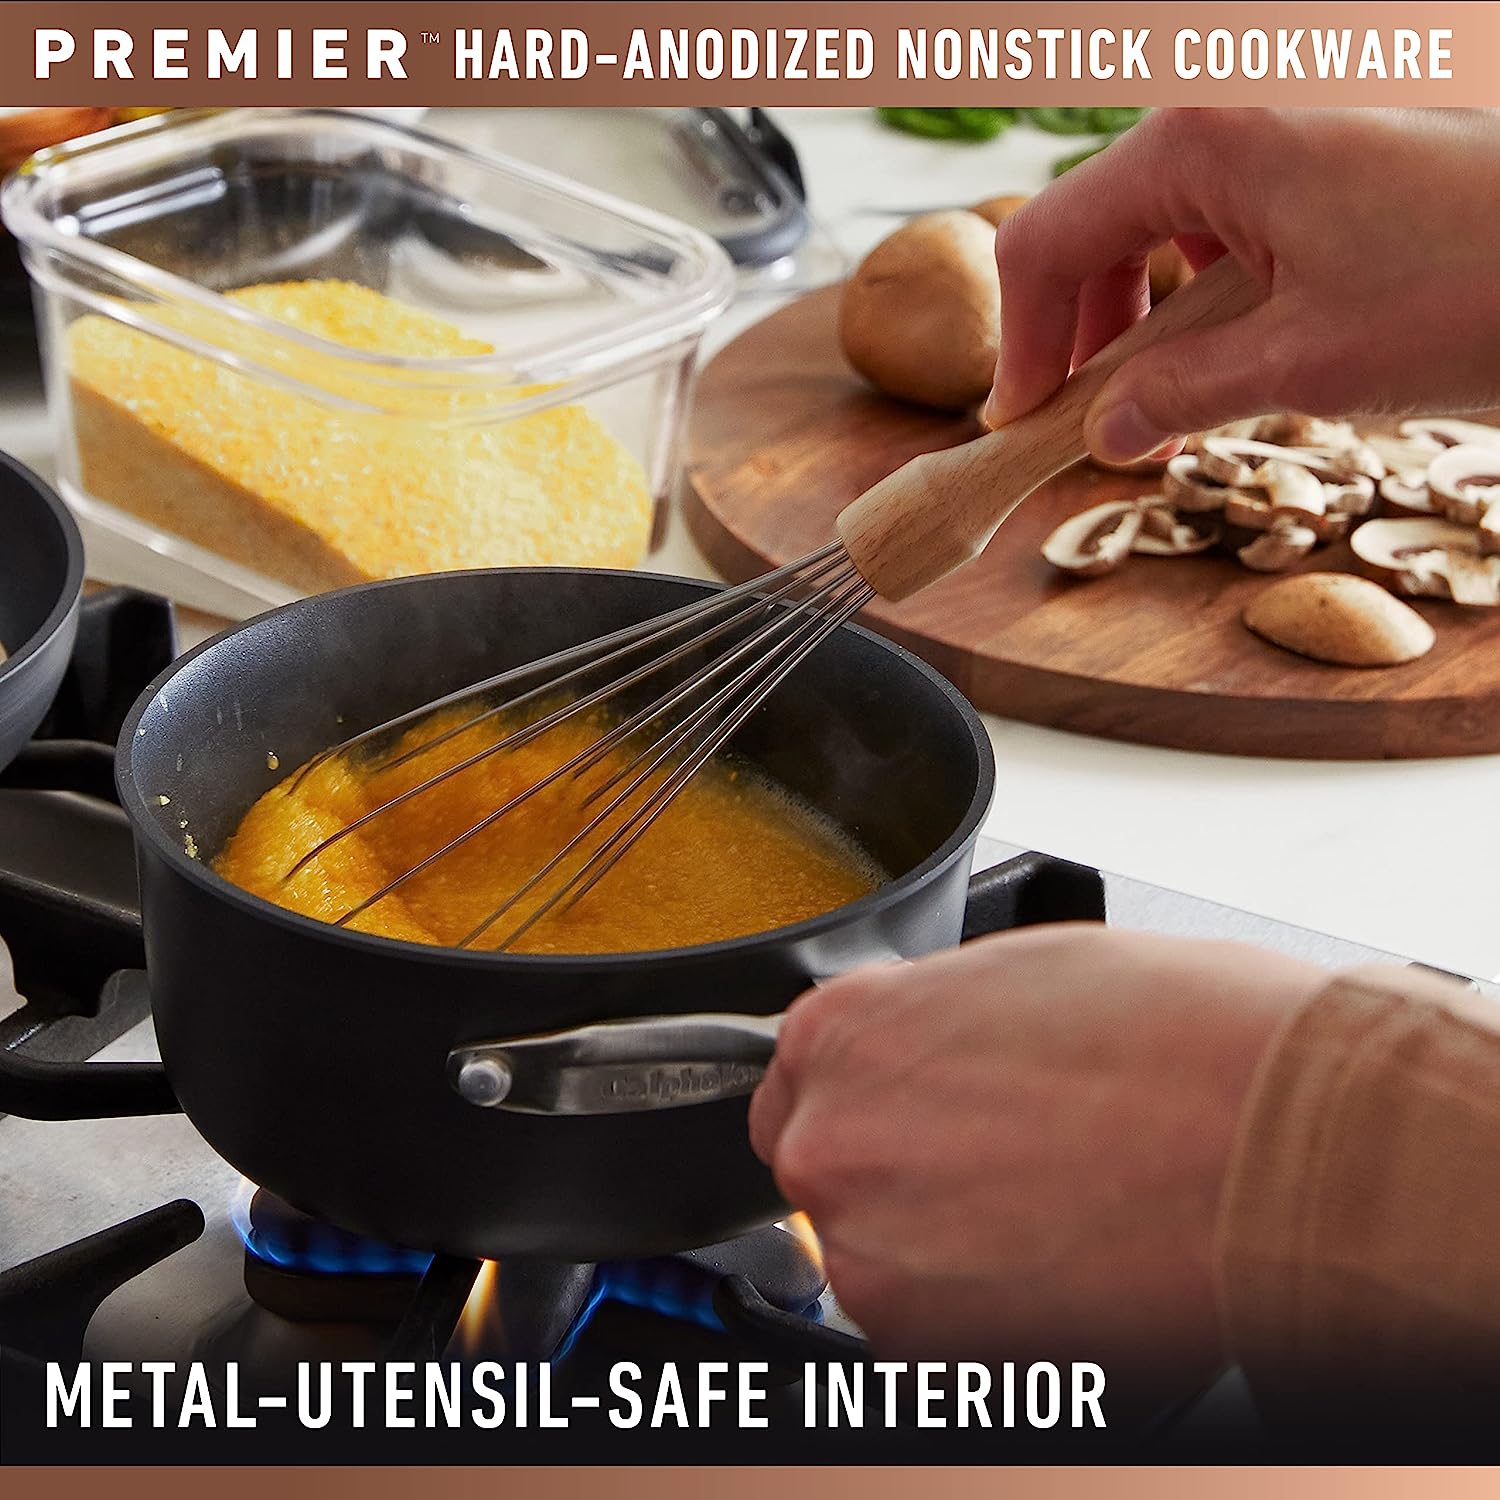 Calphalon Classic Hard-Anodized Nonstick Cookware Set, 11 pc. - Grey